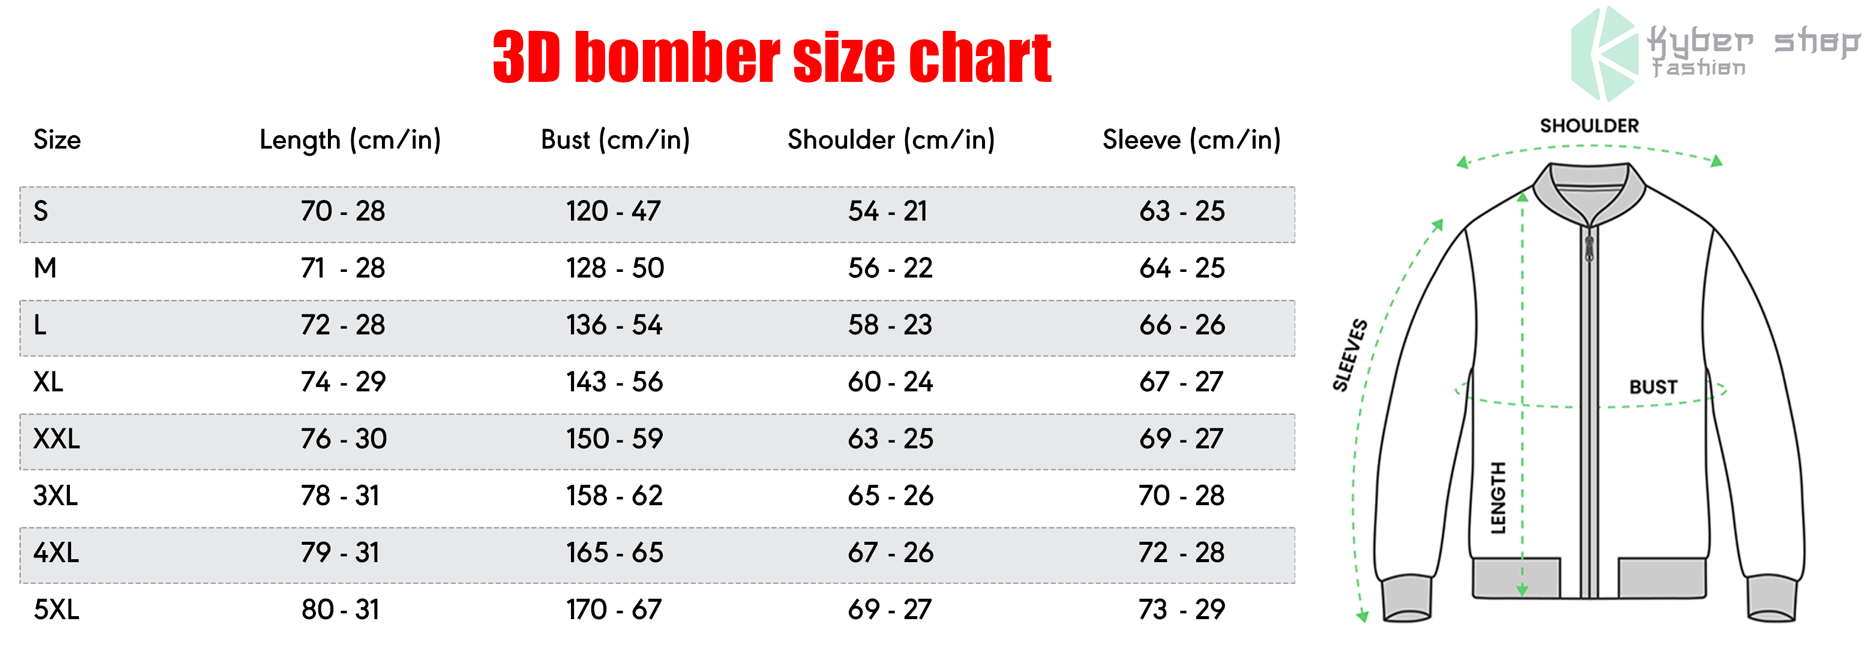 Bomber Jacket Size Chart Kybershop